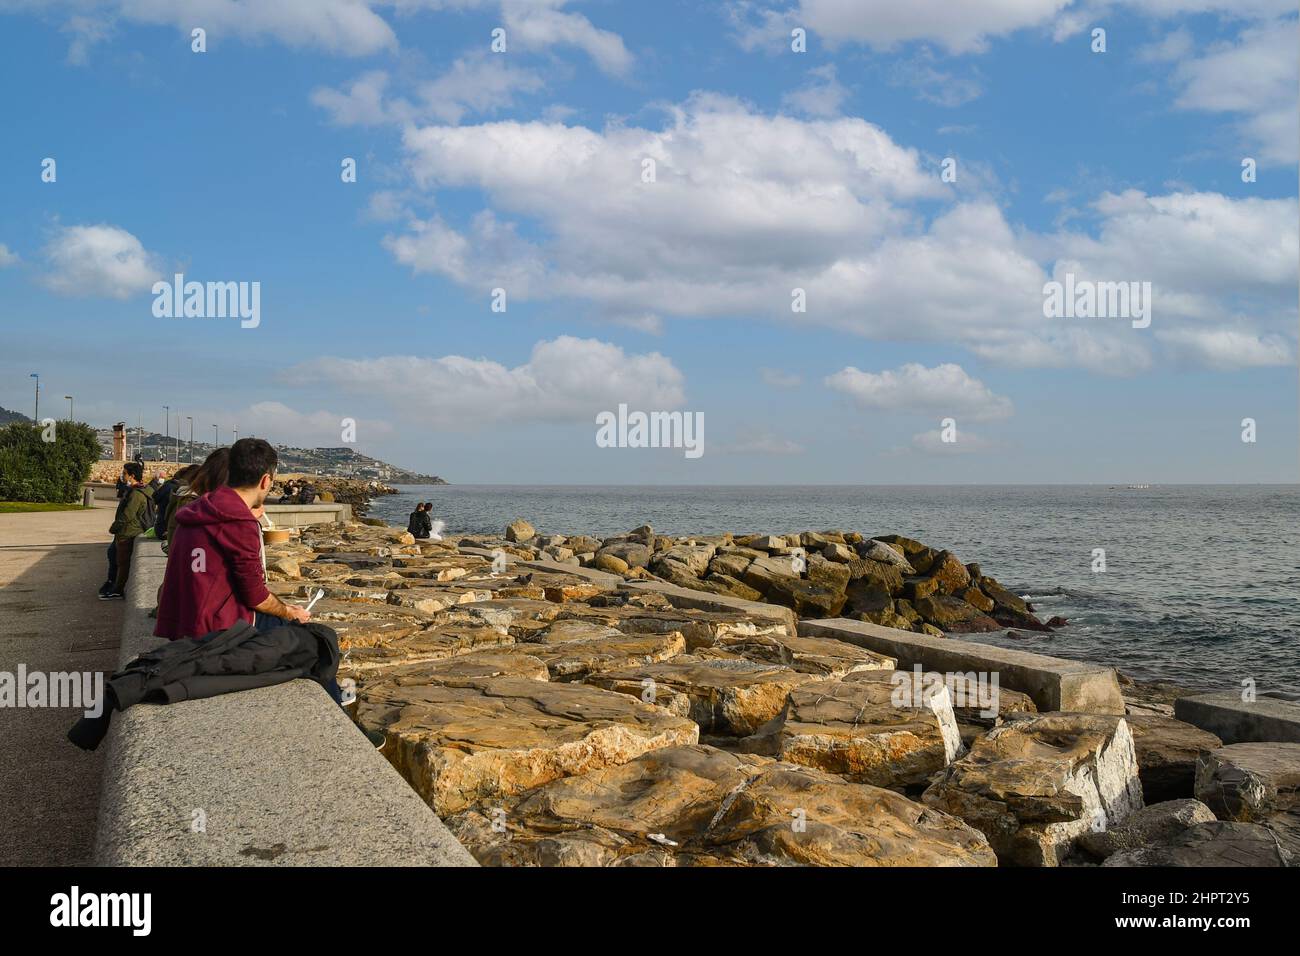 People sitting on the rocky sea shore of Sanremo in the Italian Riviera in a sunny winter day, Imperia, Liguria, Italy Stock Photo